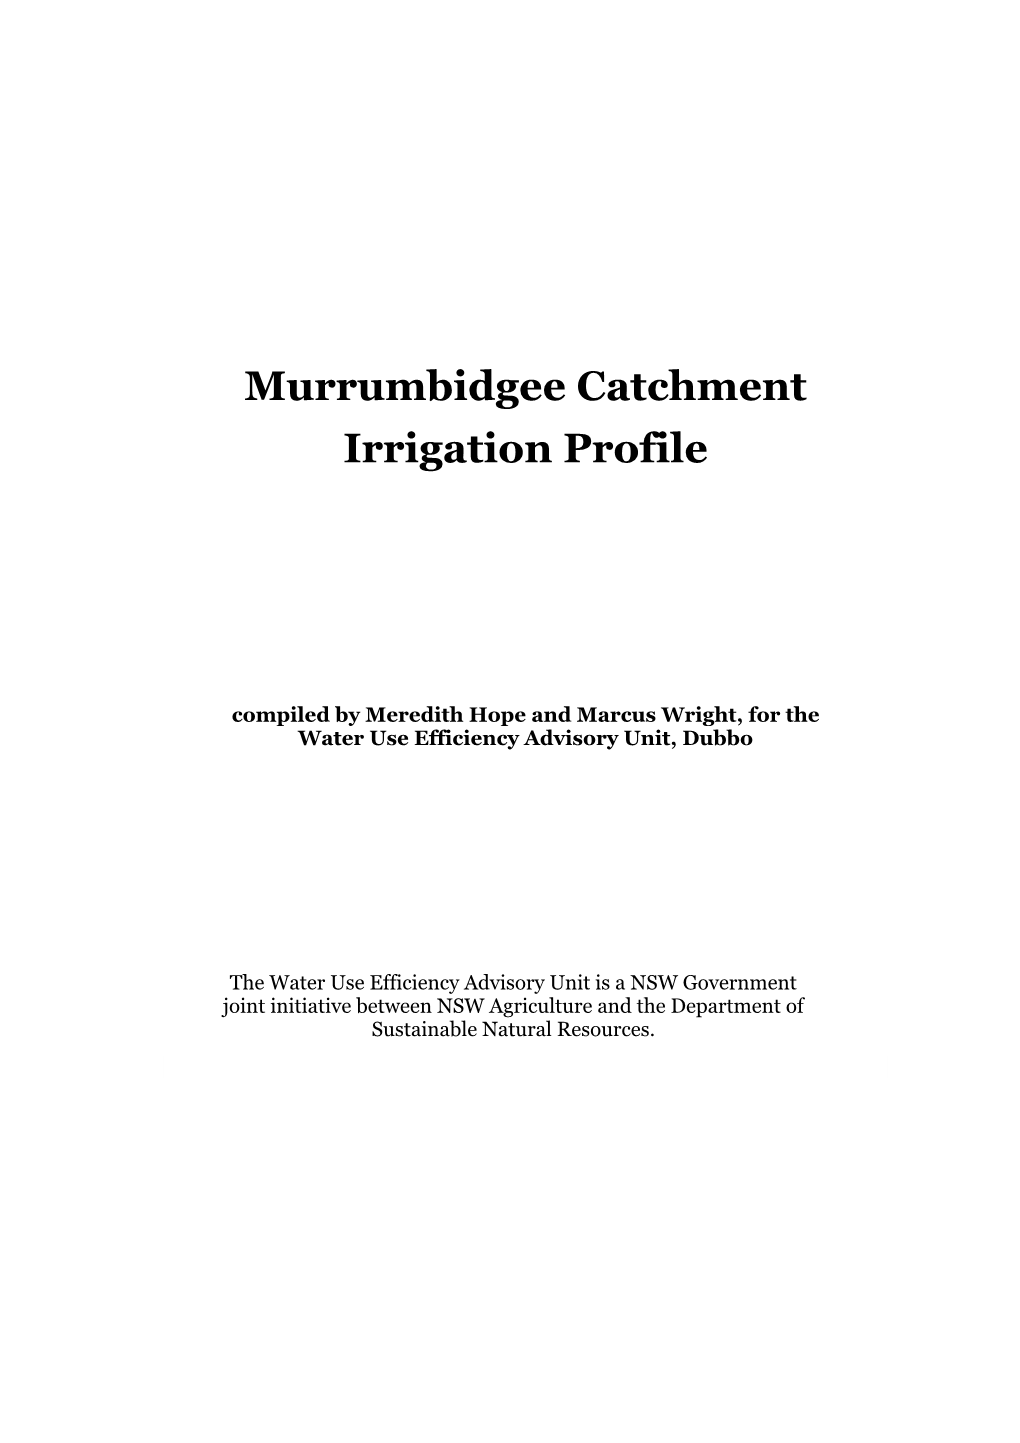 Murrumbidgee Catchment Irrigation Profile